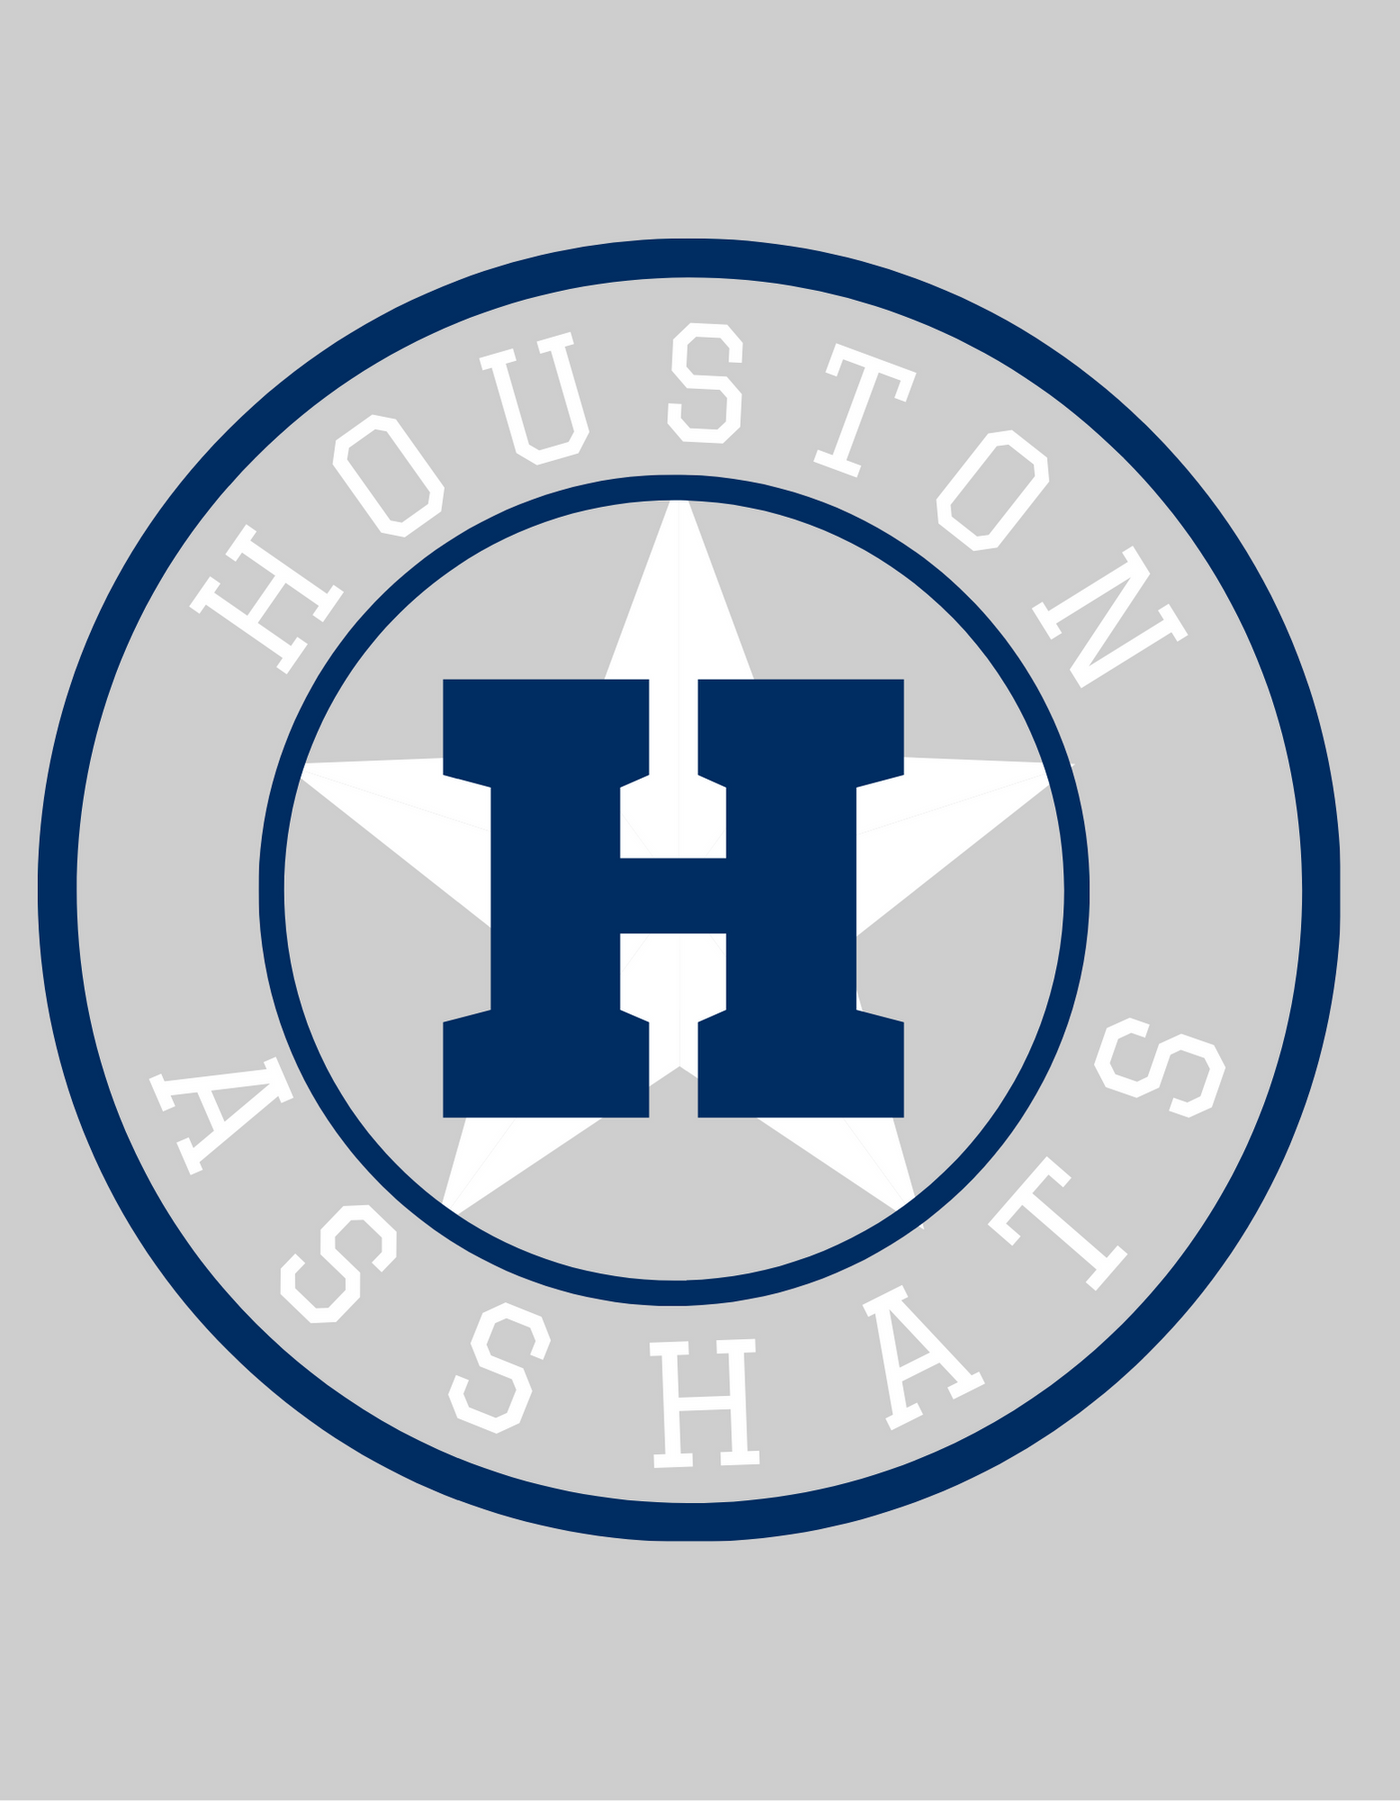 Houston Asshats #9 Ash Hull Tee